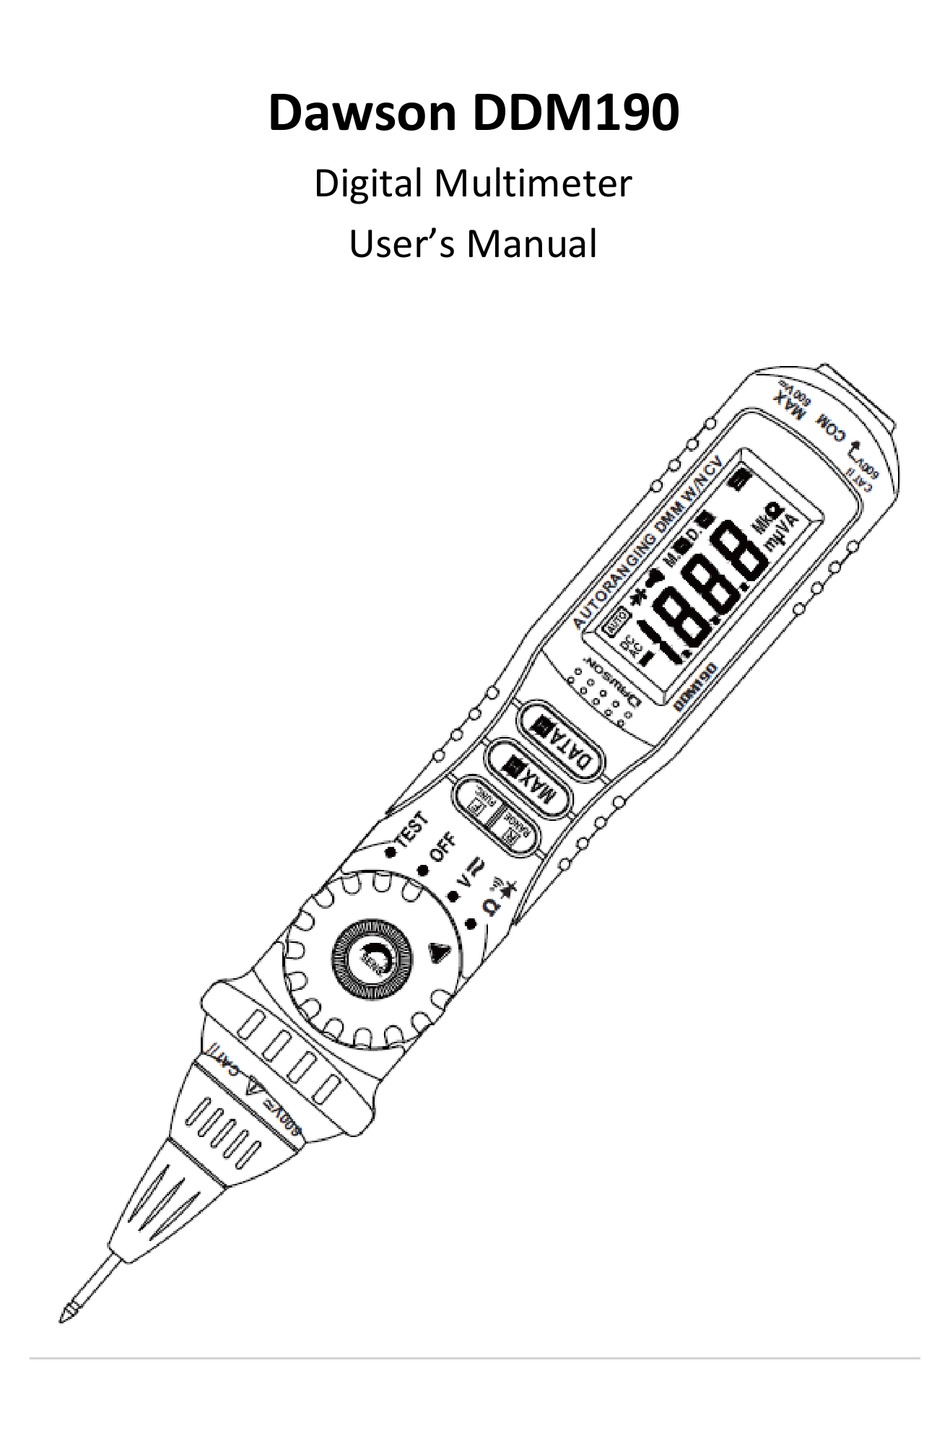 Dawson Tools DDM190 Pen-Type Digital Multimeter 